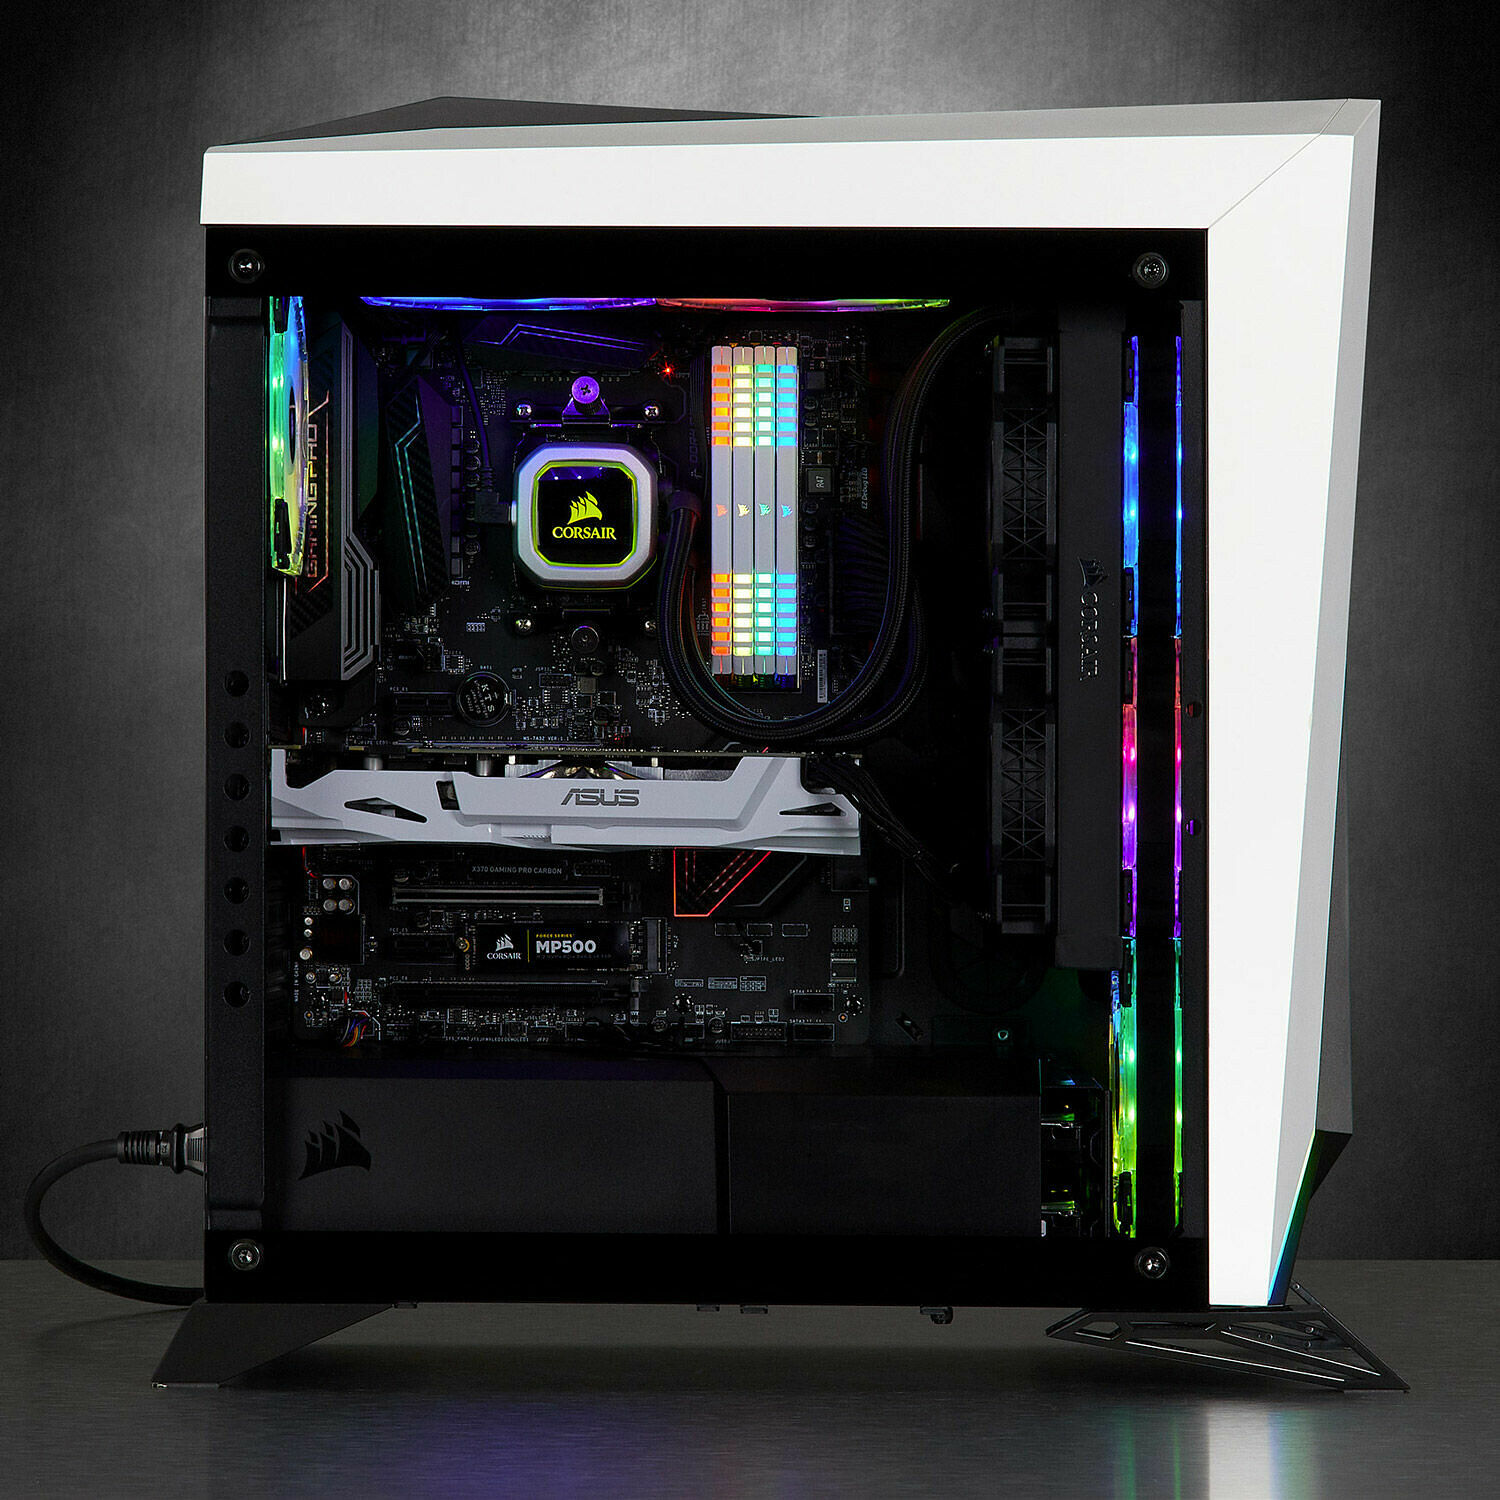 BOITIER PC GAMER CORSAIR CARBIDE SPEC-OMEGA RGB Noir – Asus Store Maroc -  Setup Gamer & Composant